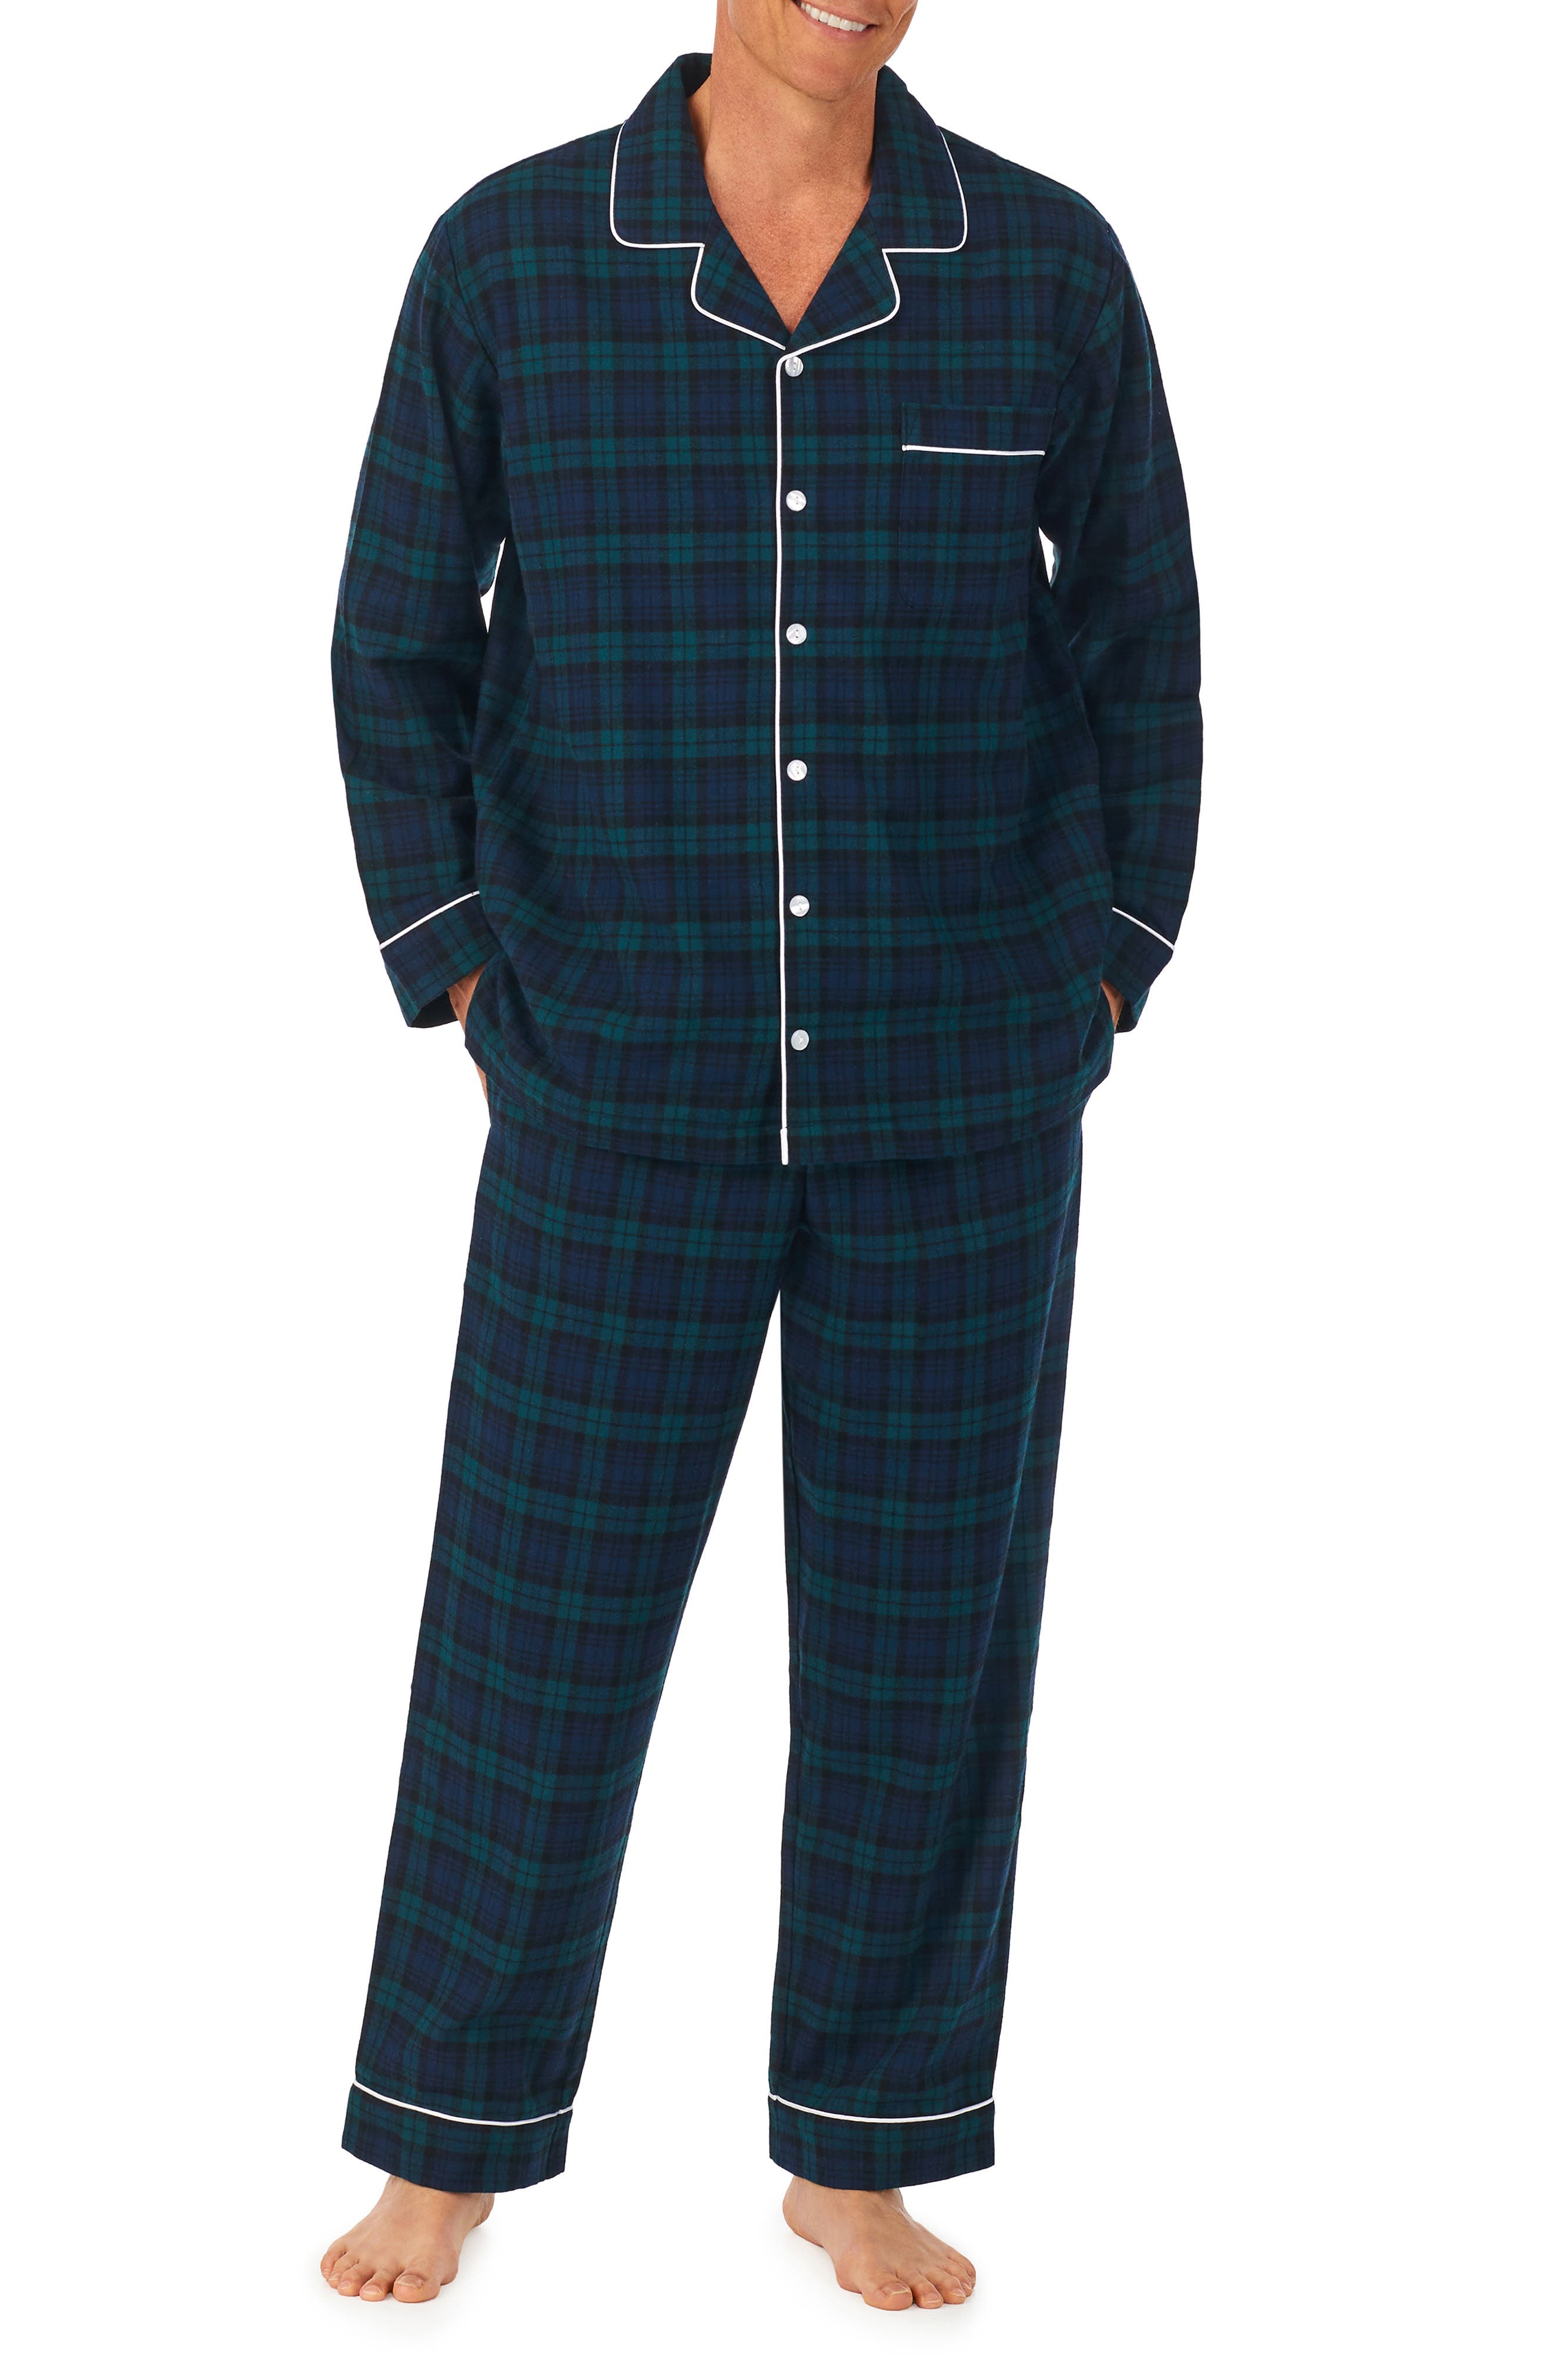 Mens Pyjamas Set Long Sleeve Top & Pyjama Bottoms Cotton Checked Sleepwear Pjs Trousers Pyjamas for Men Nightwear Loungewear 